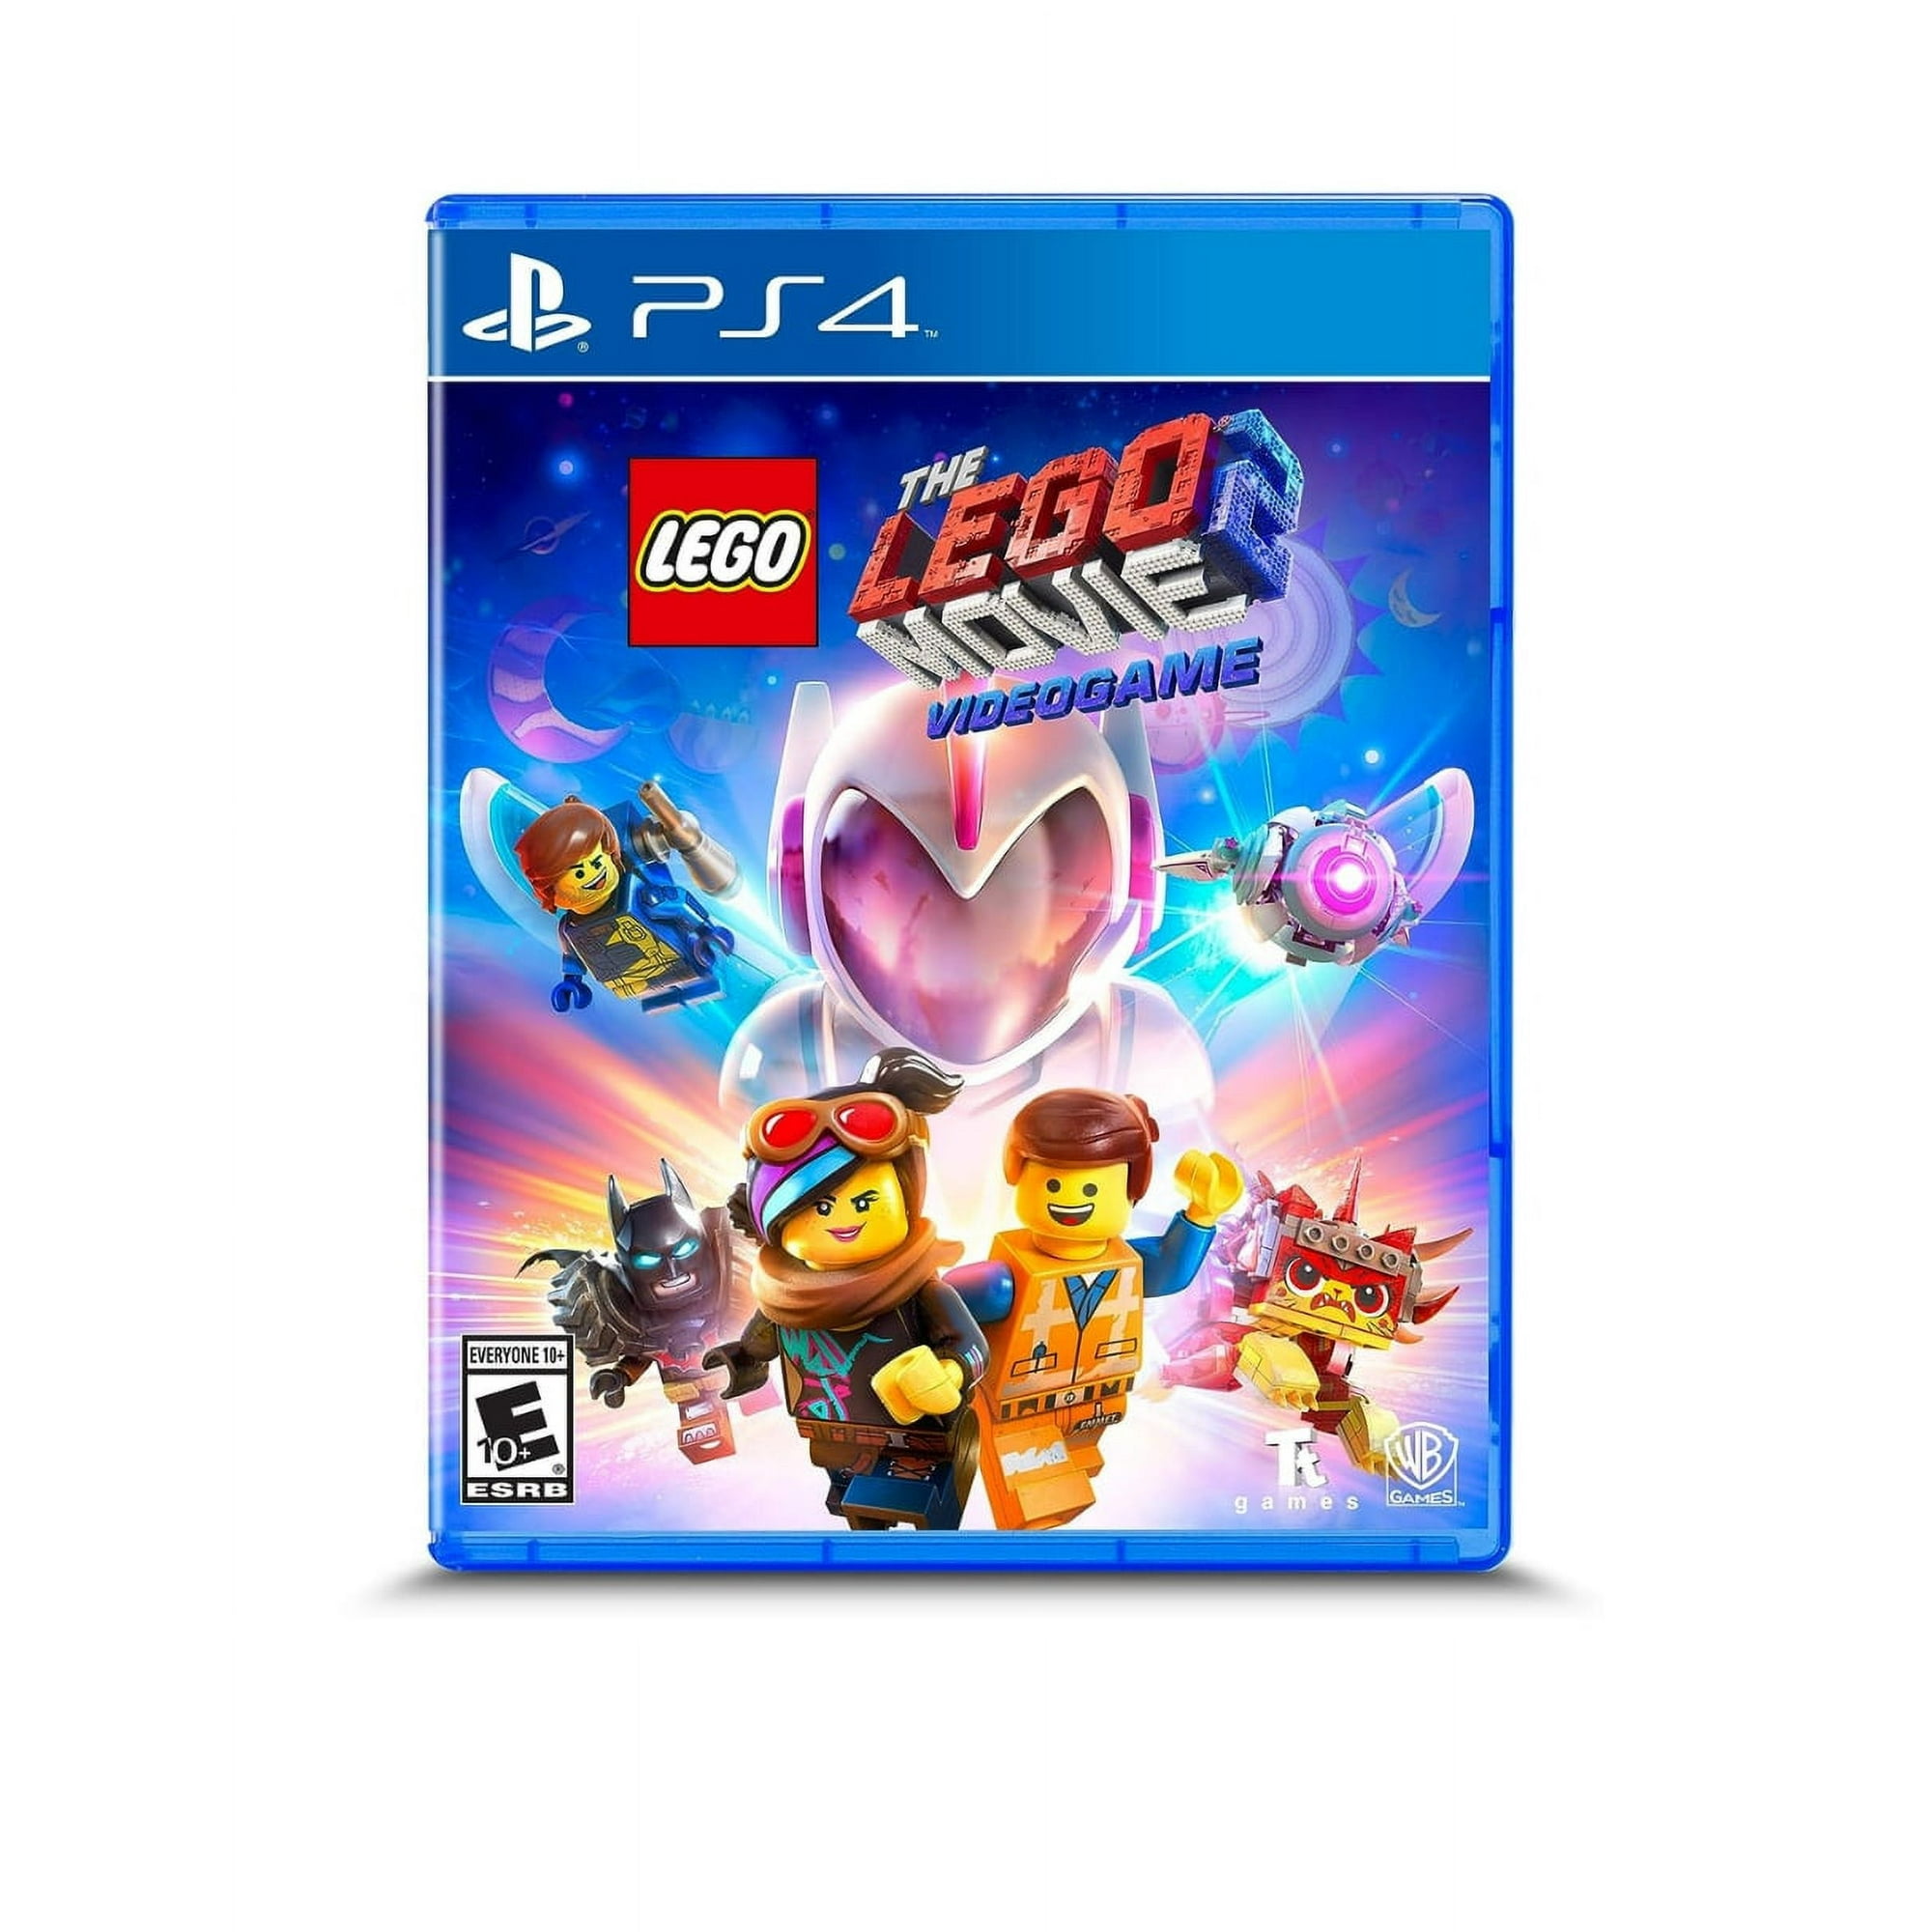 LEGO Marvel Super Heroes Marvel Super Heroes Standard Edition Warner Bros.  PS4 Físico